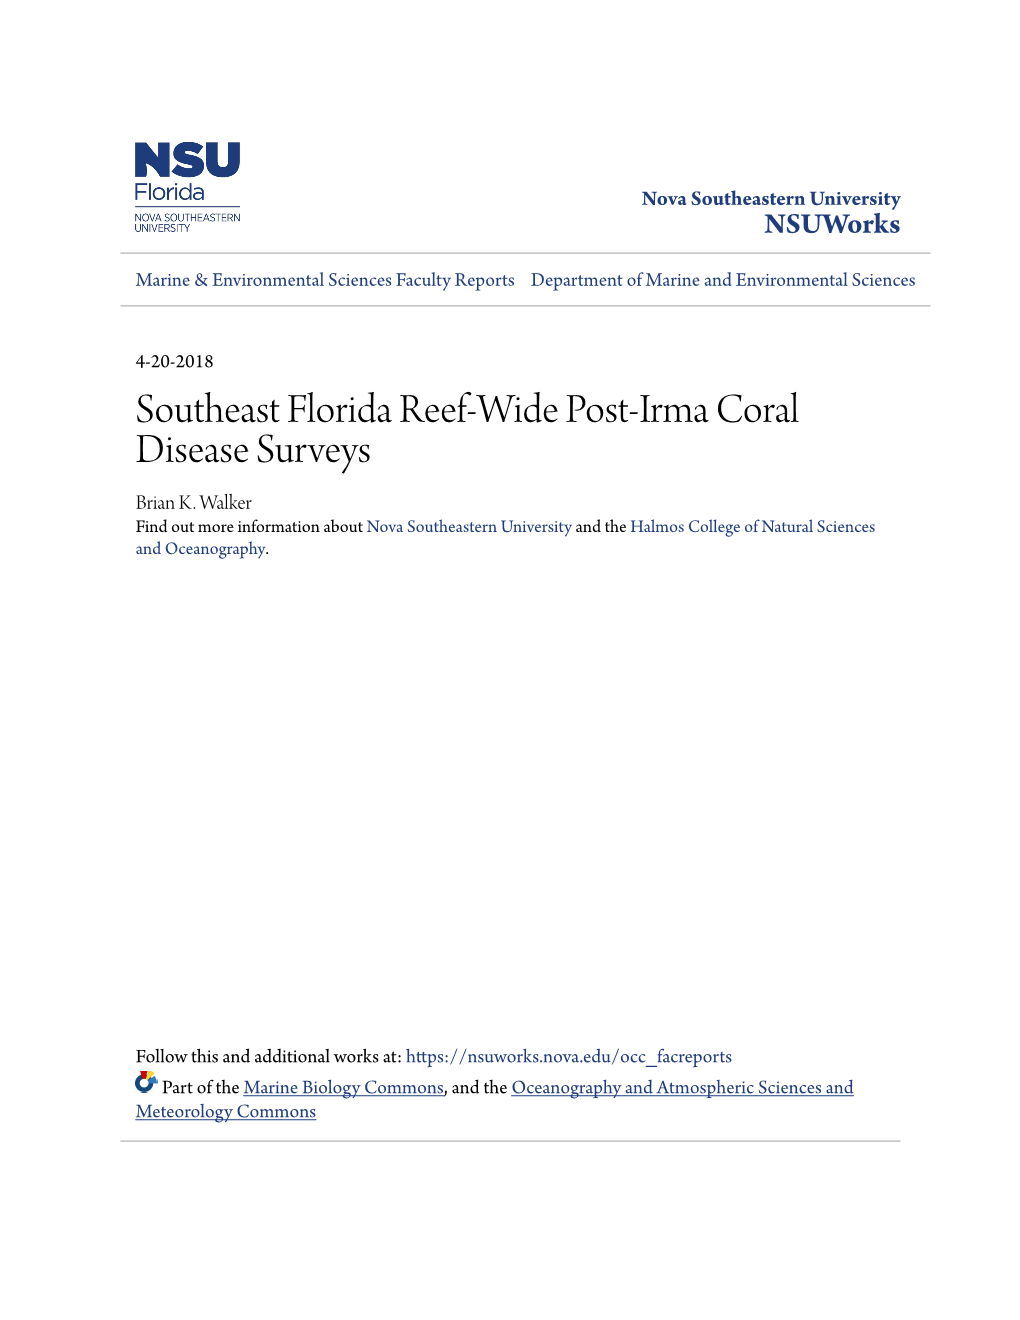 Southeast Florida Reef-Wide Post-Irma Coral Disease Surveys Brian K